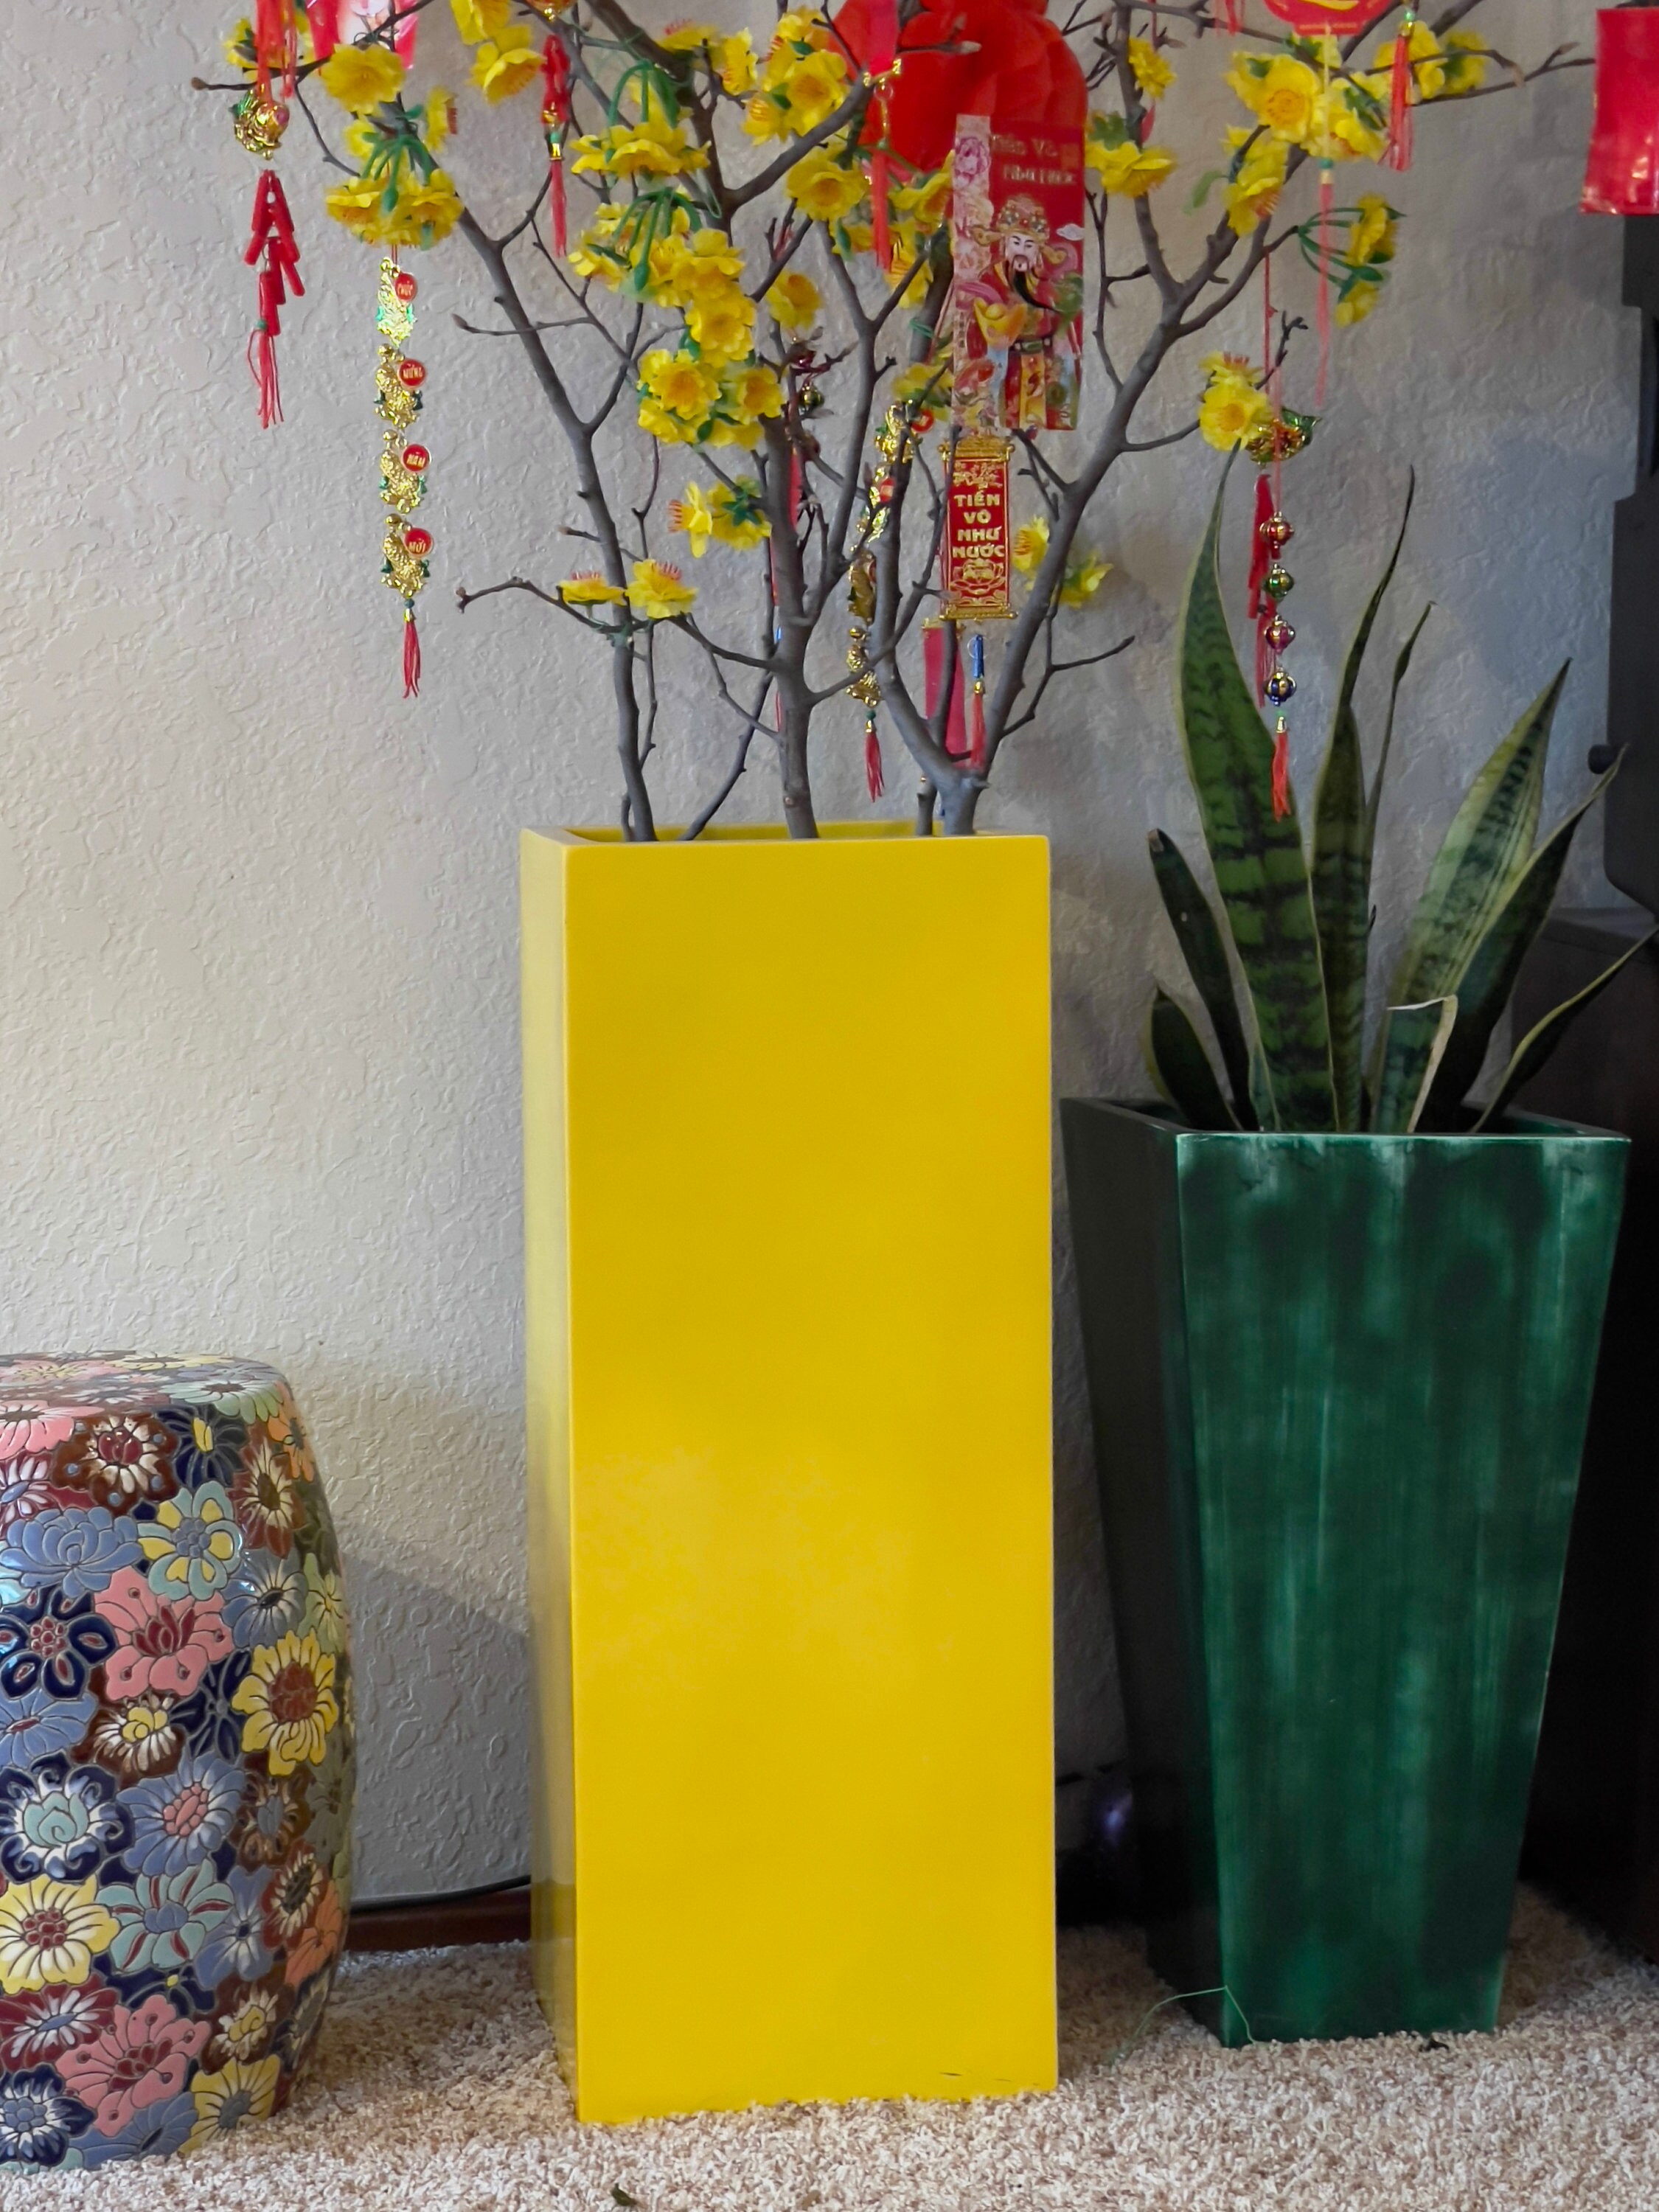 20-27 Inches Tall Fiberglass Planter in Glossy Yellow, Beautiful